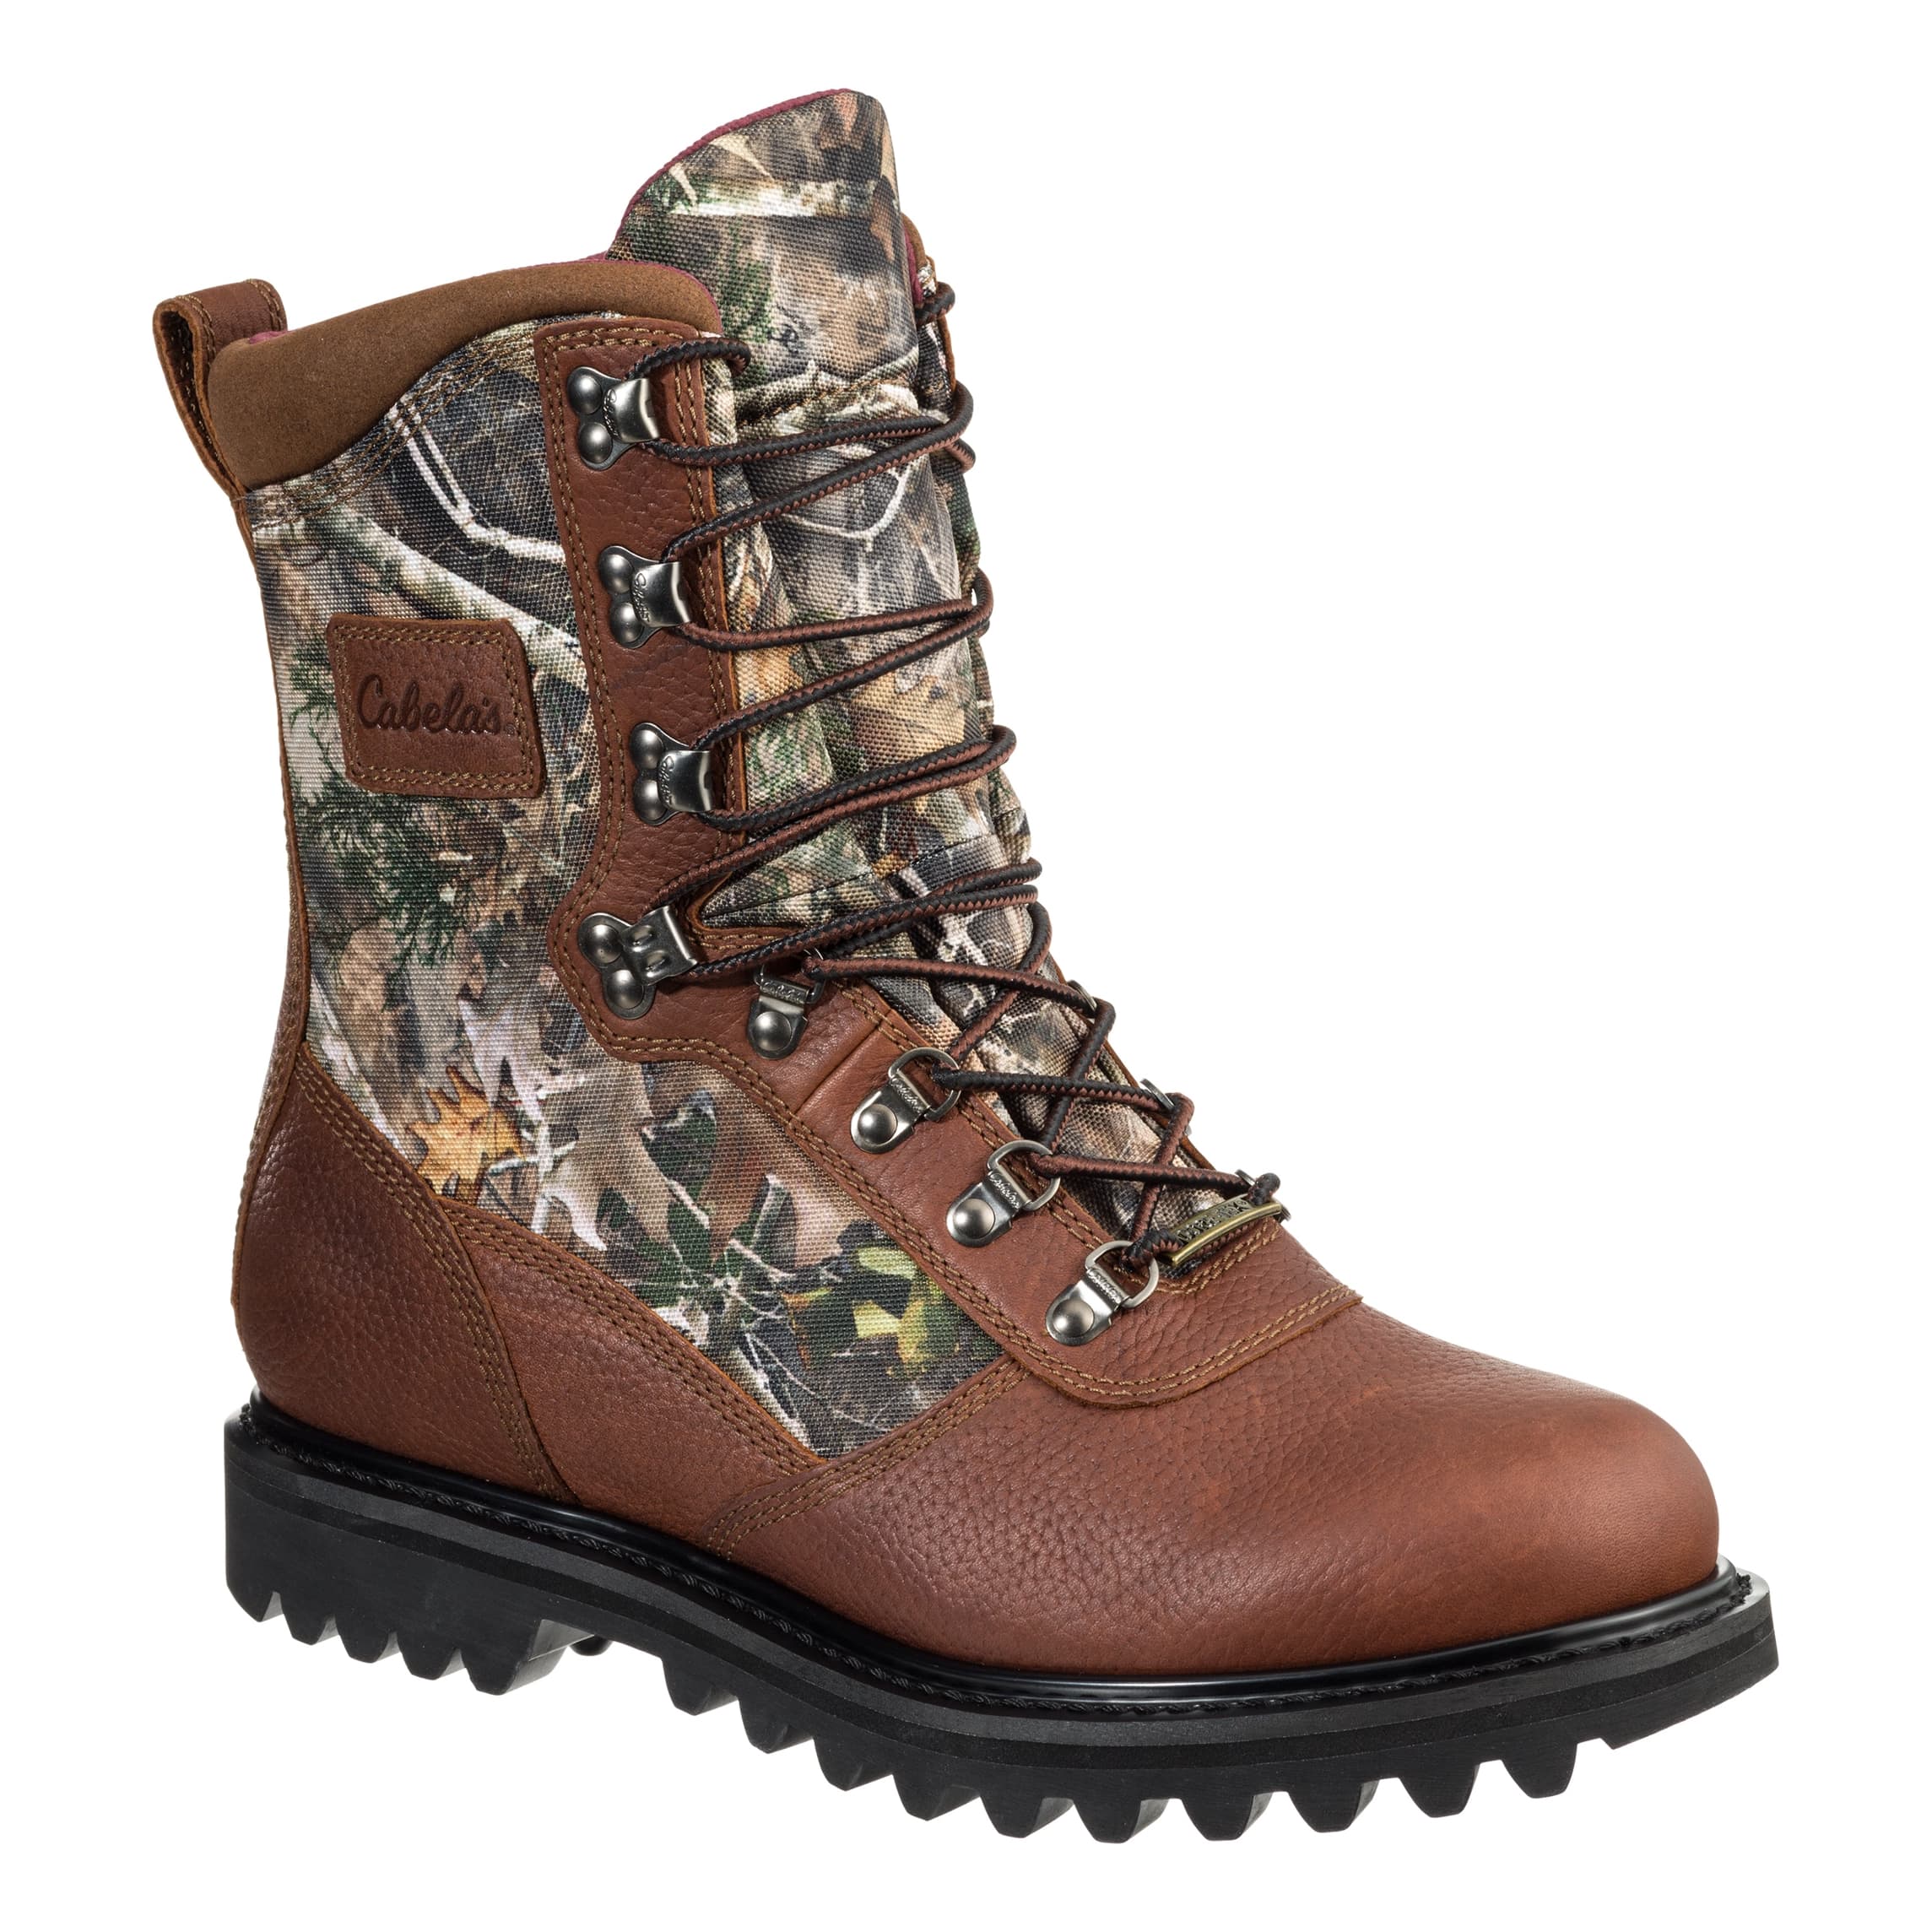 Cabela’s Men’s Iron Ridge™ GORE-TEX® Hunting Boots